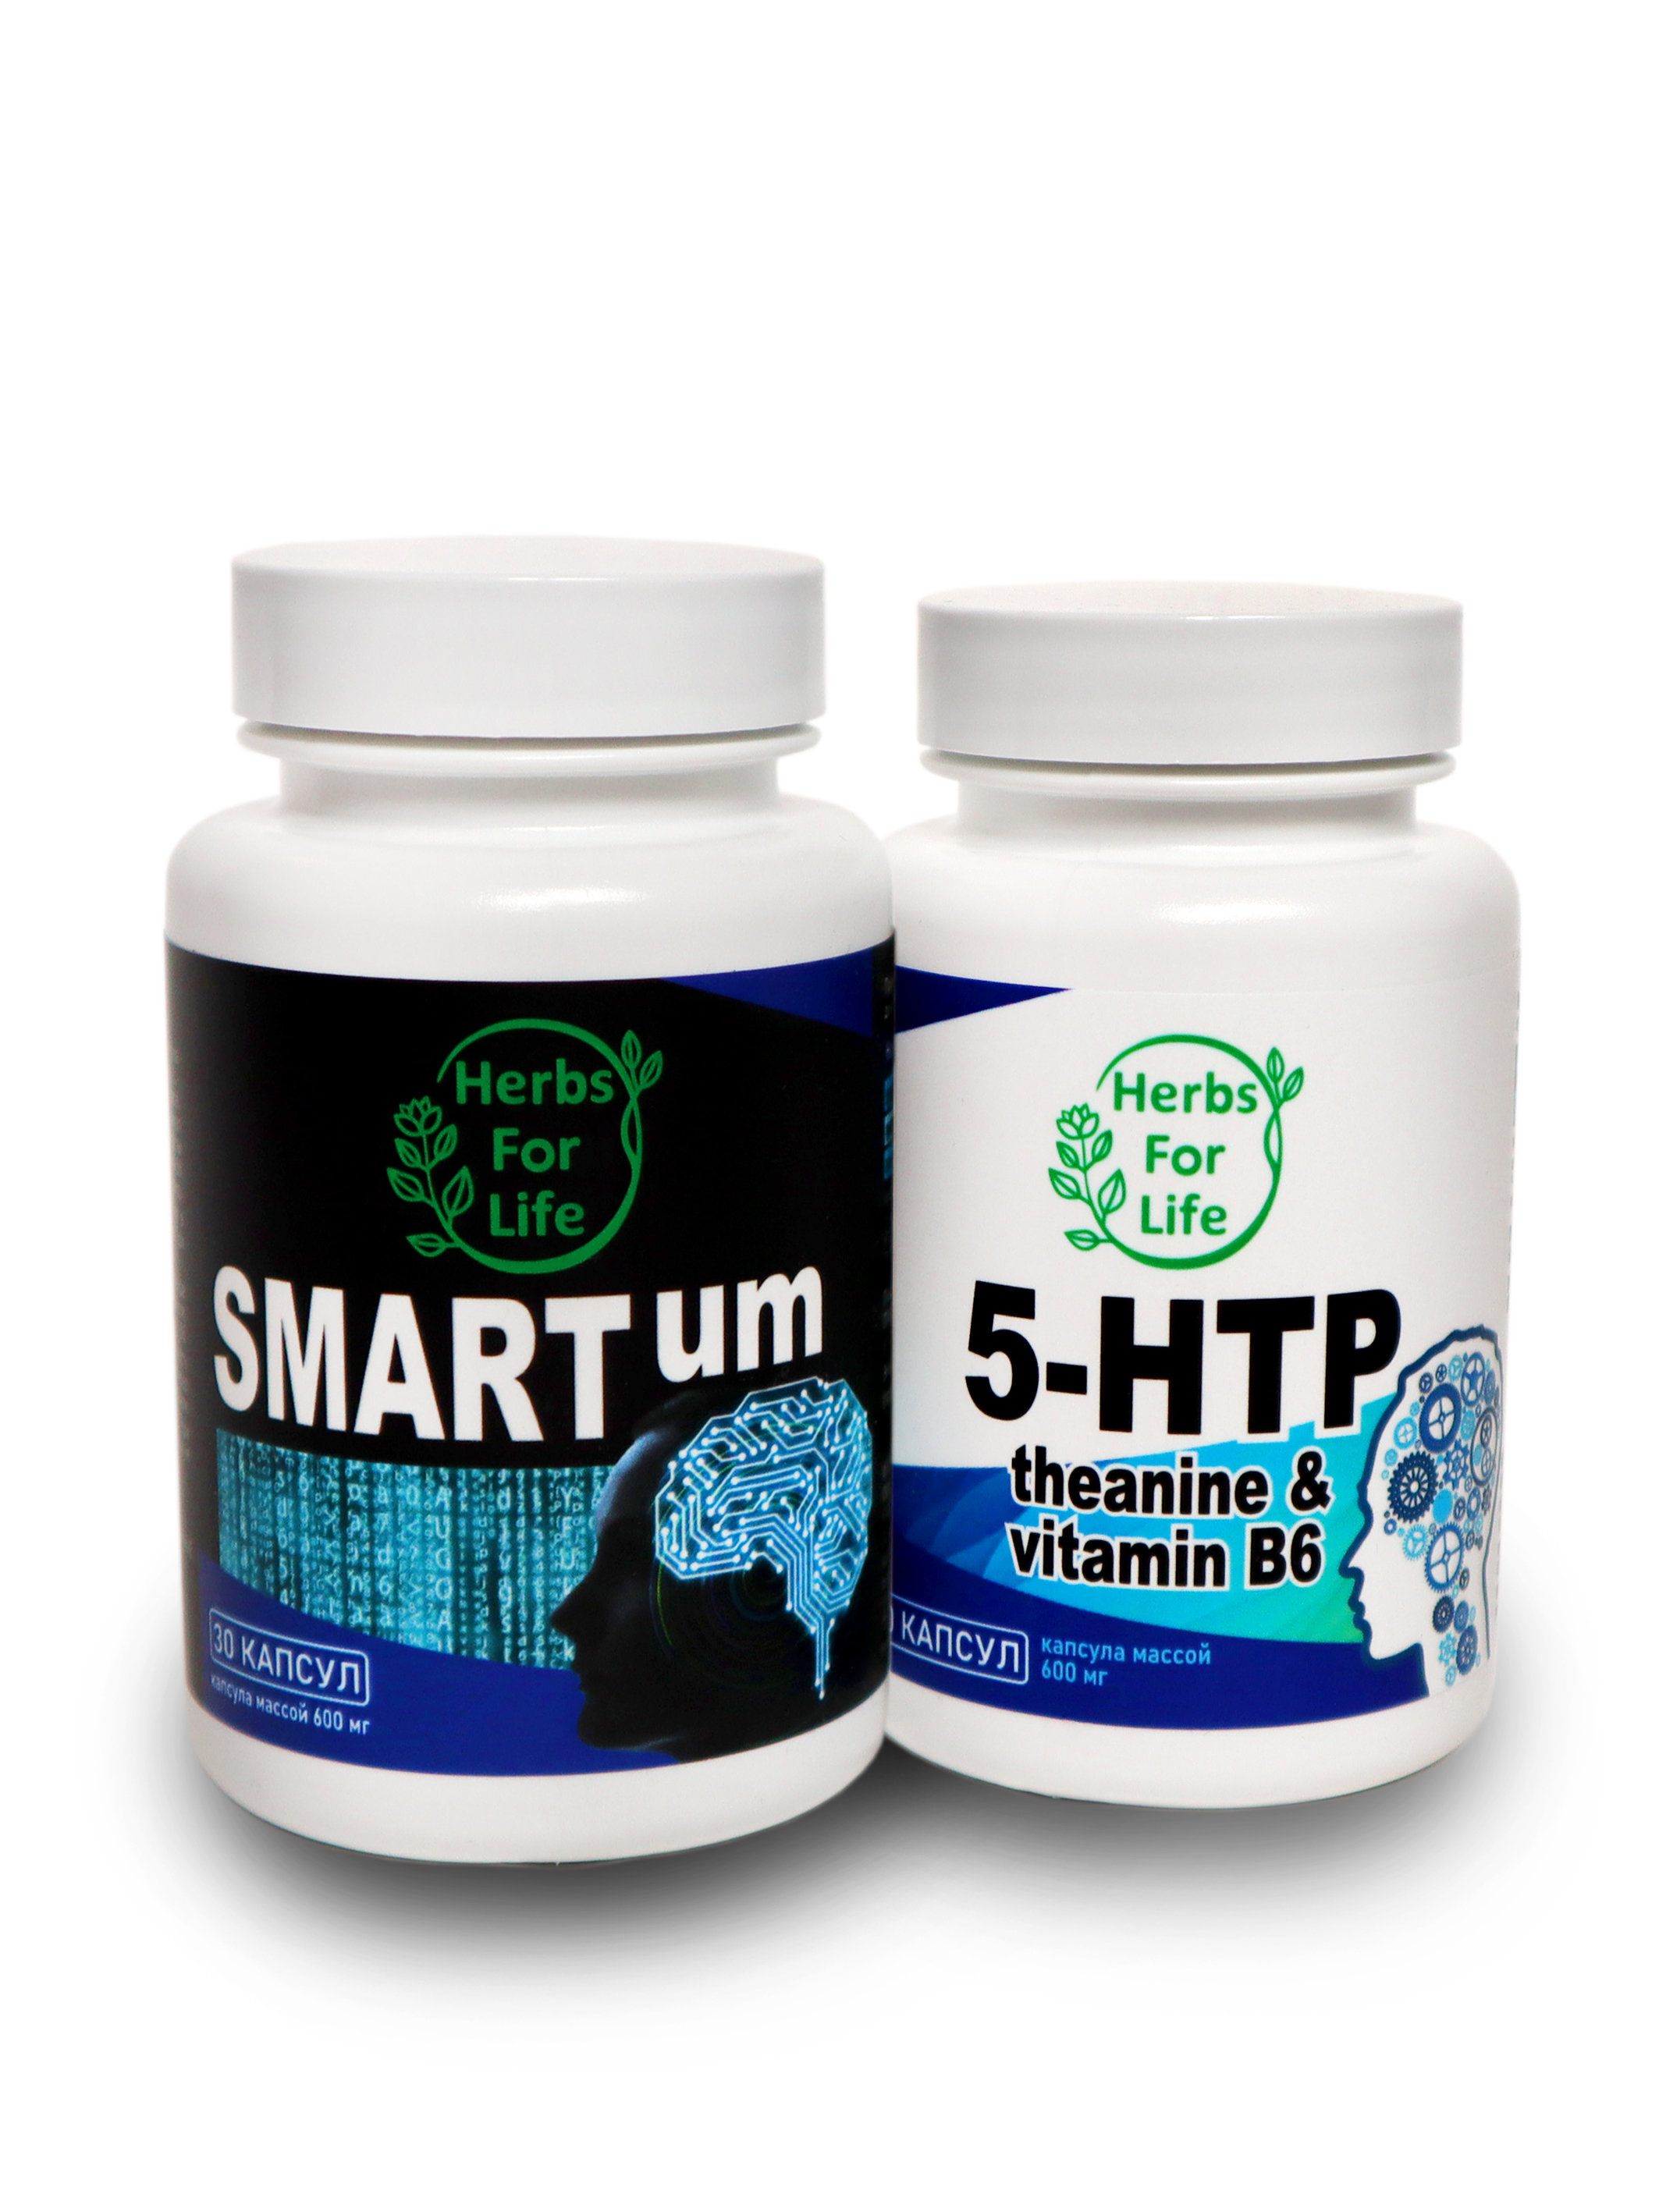 Купить Herbs For Life SmartUm капсулы 600 мг 30 шт. + 5-HTP капсулы 600 мг 30 шт.